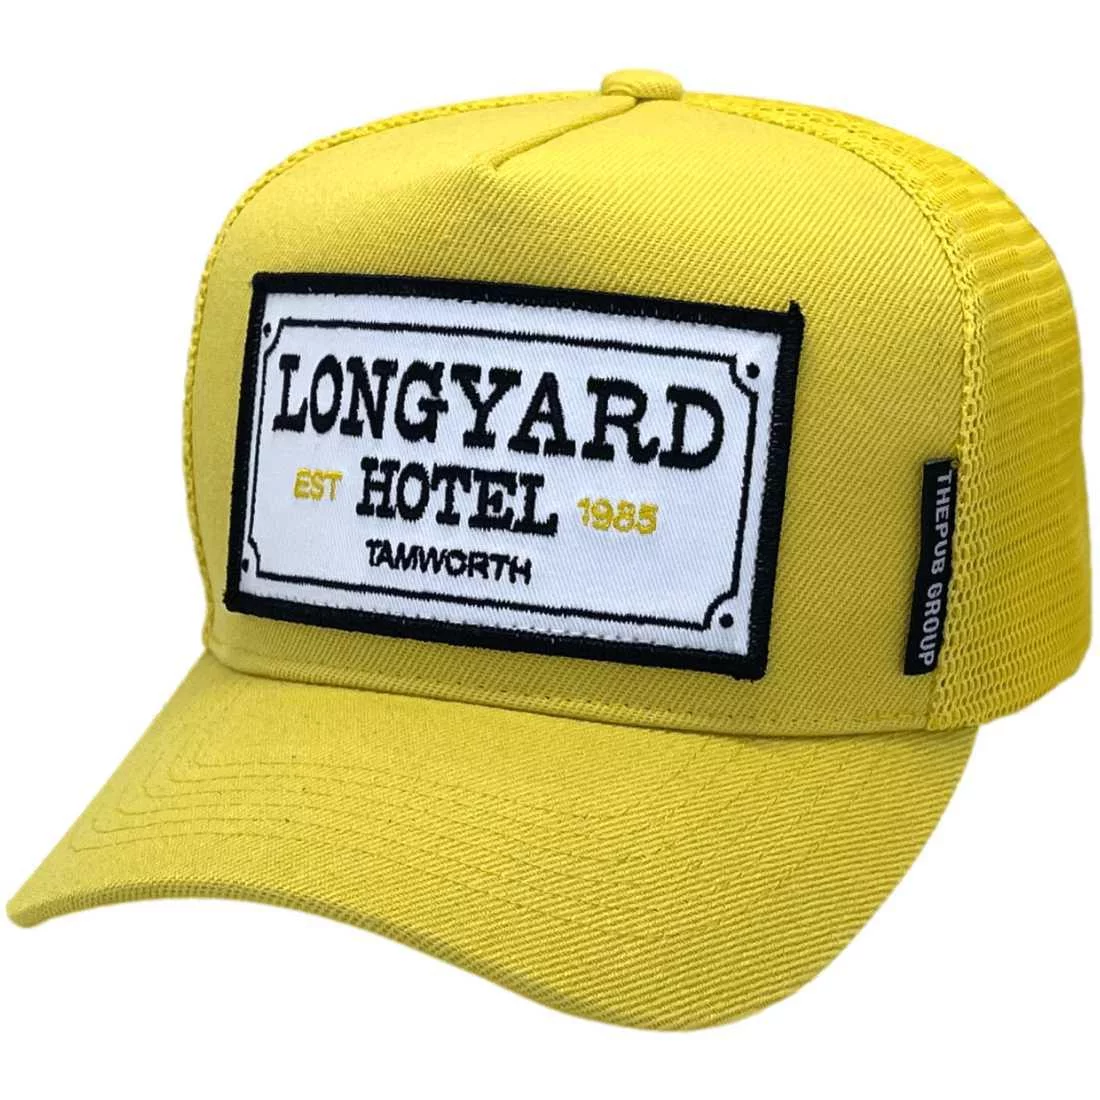 Longyard Hotel Tamworth NSW HP Original Basic Aussie Trucker Hat snapback with optional NO sidebands and Exclusive Australian Head Fit - Acrylic Yellow